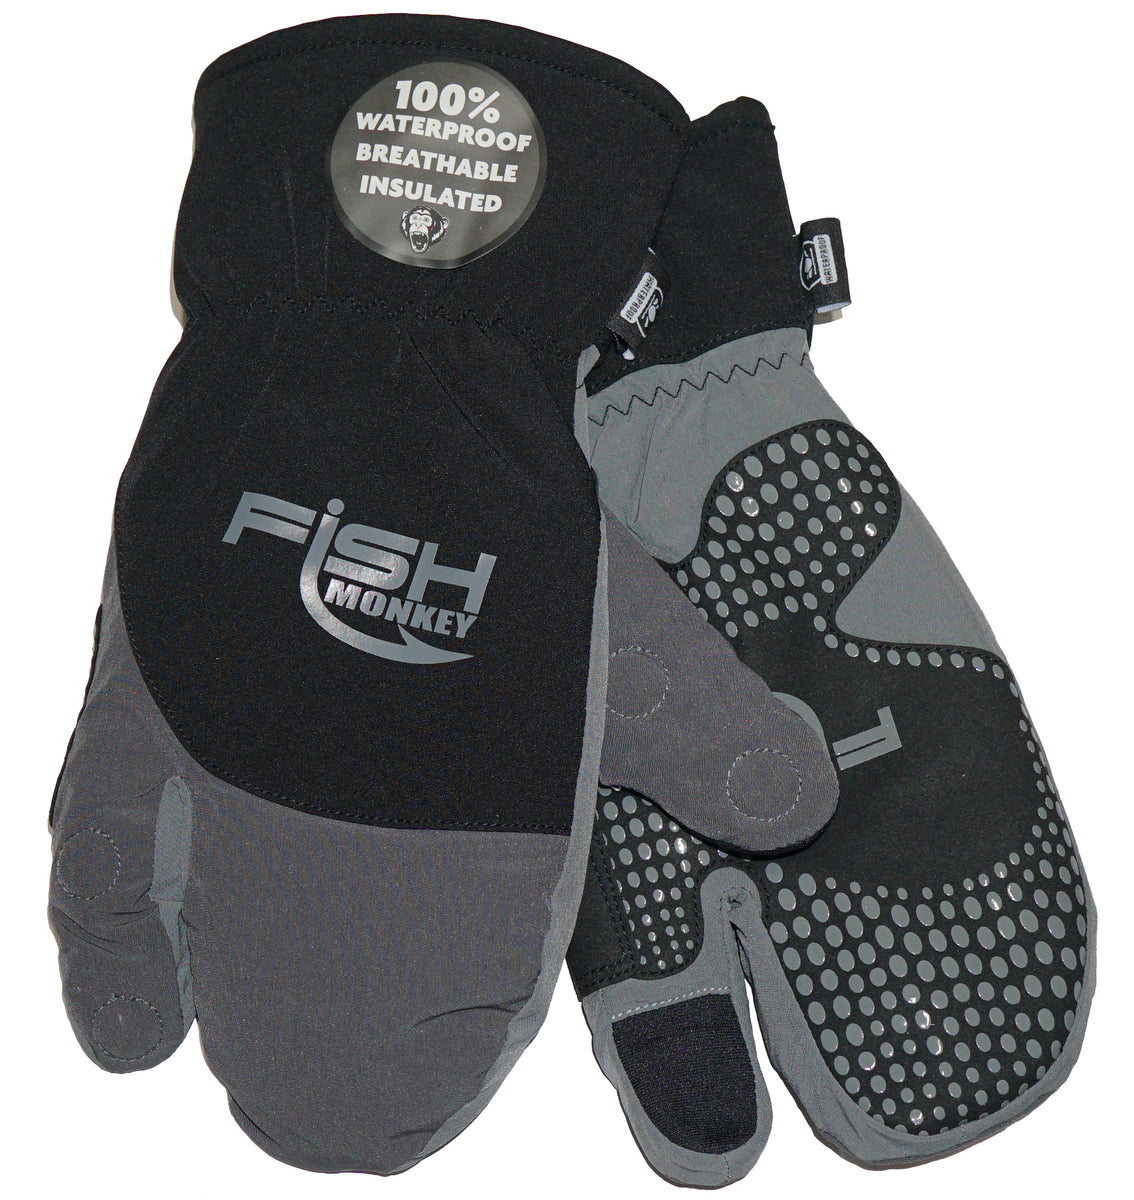 Fish Monkey Stealth Dry-Tec Glove - Medium